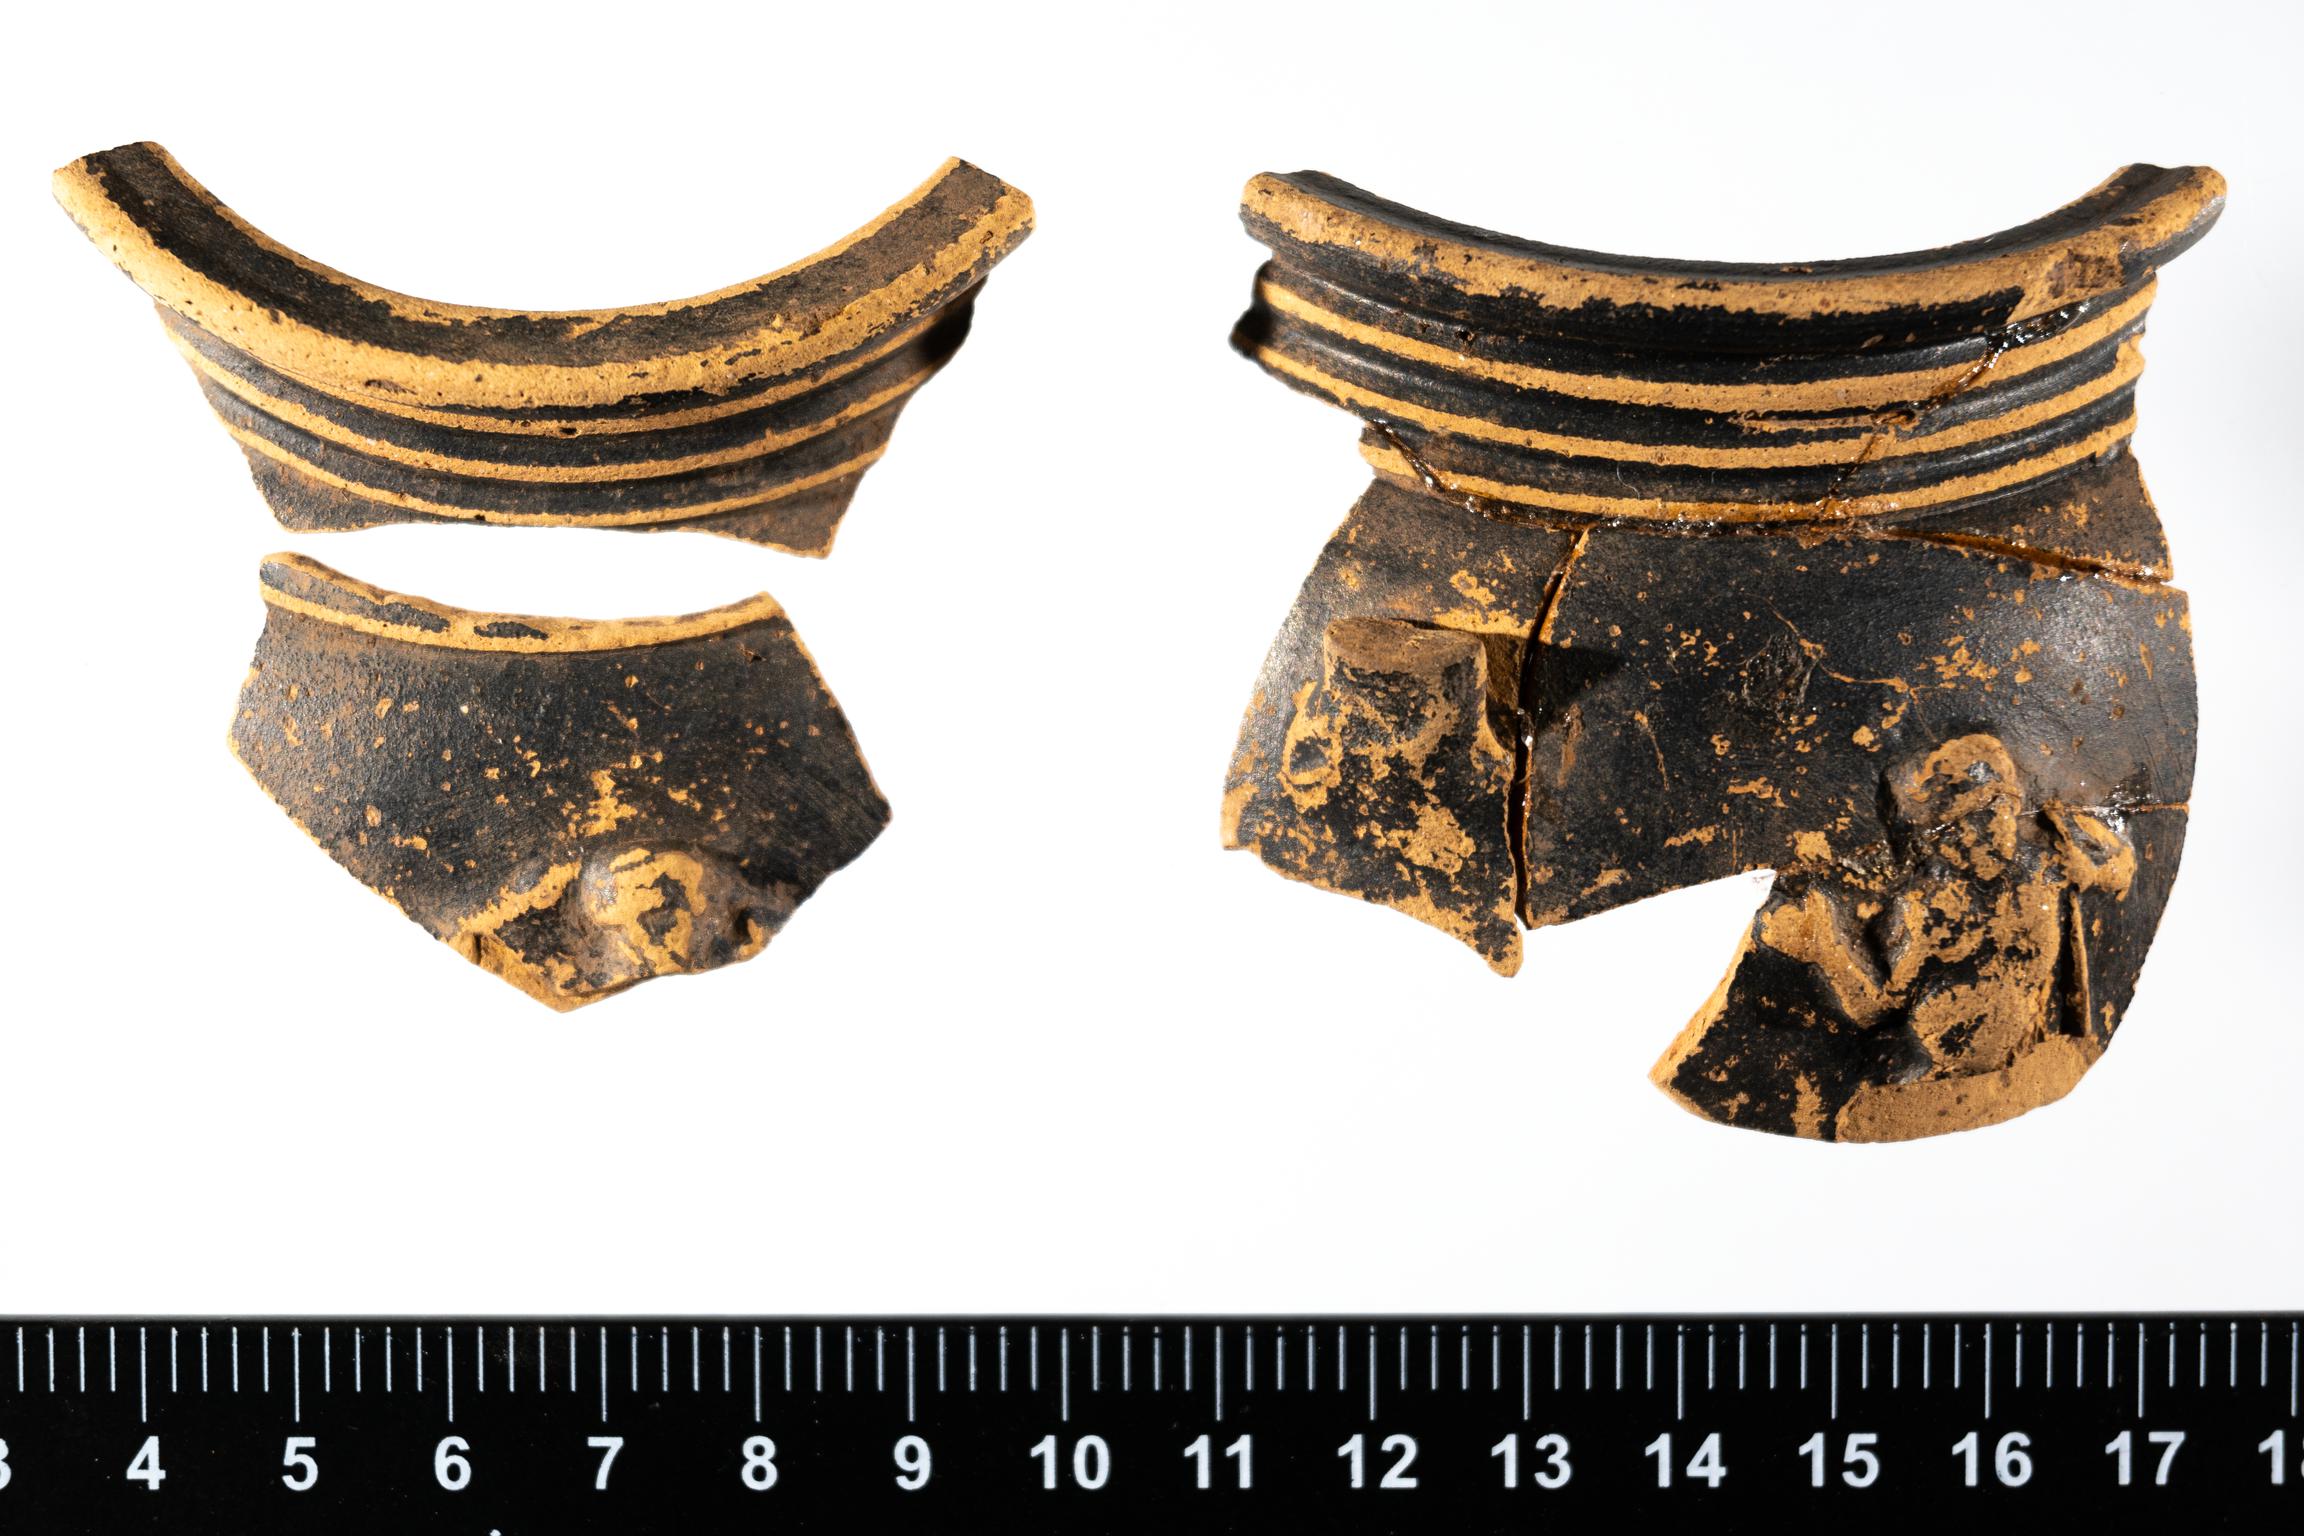 Roman pottery jar